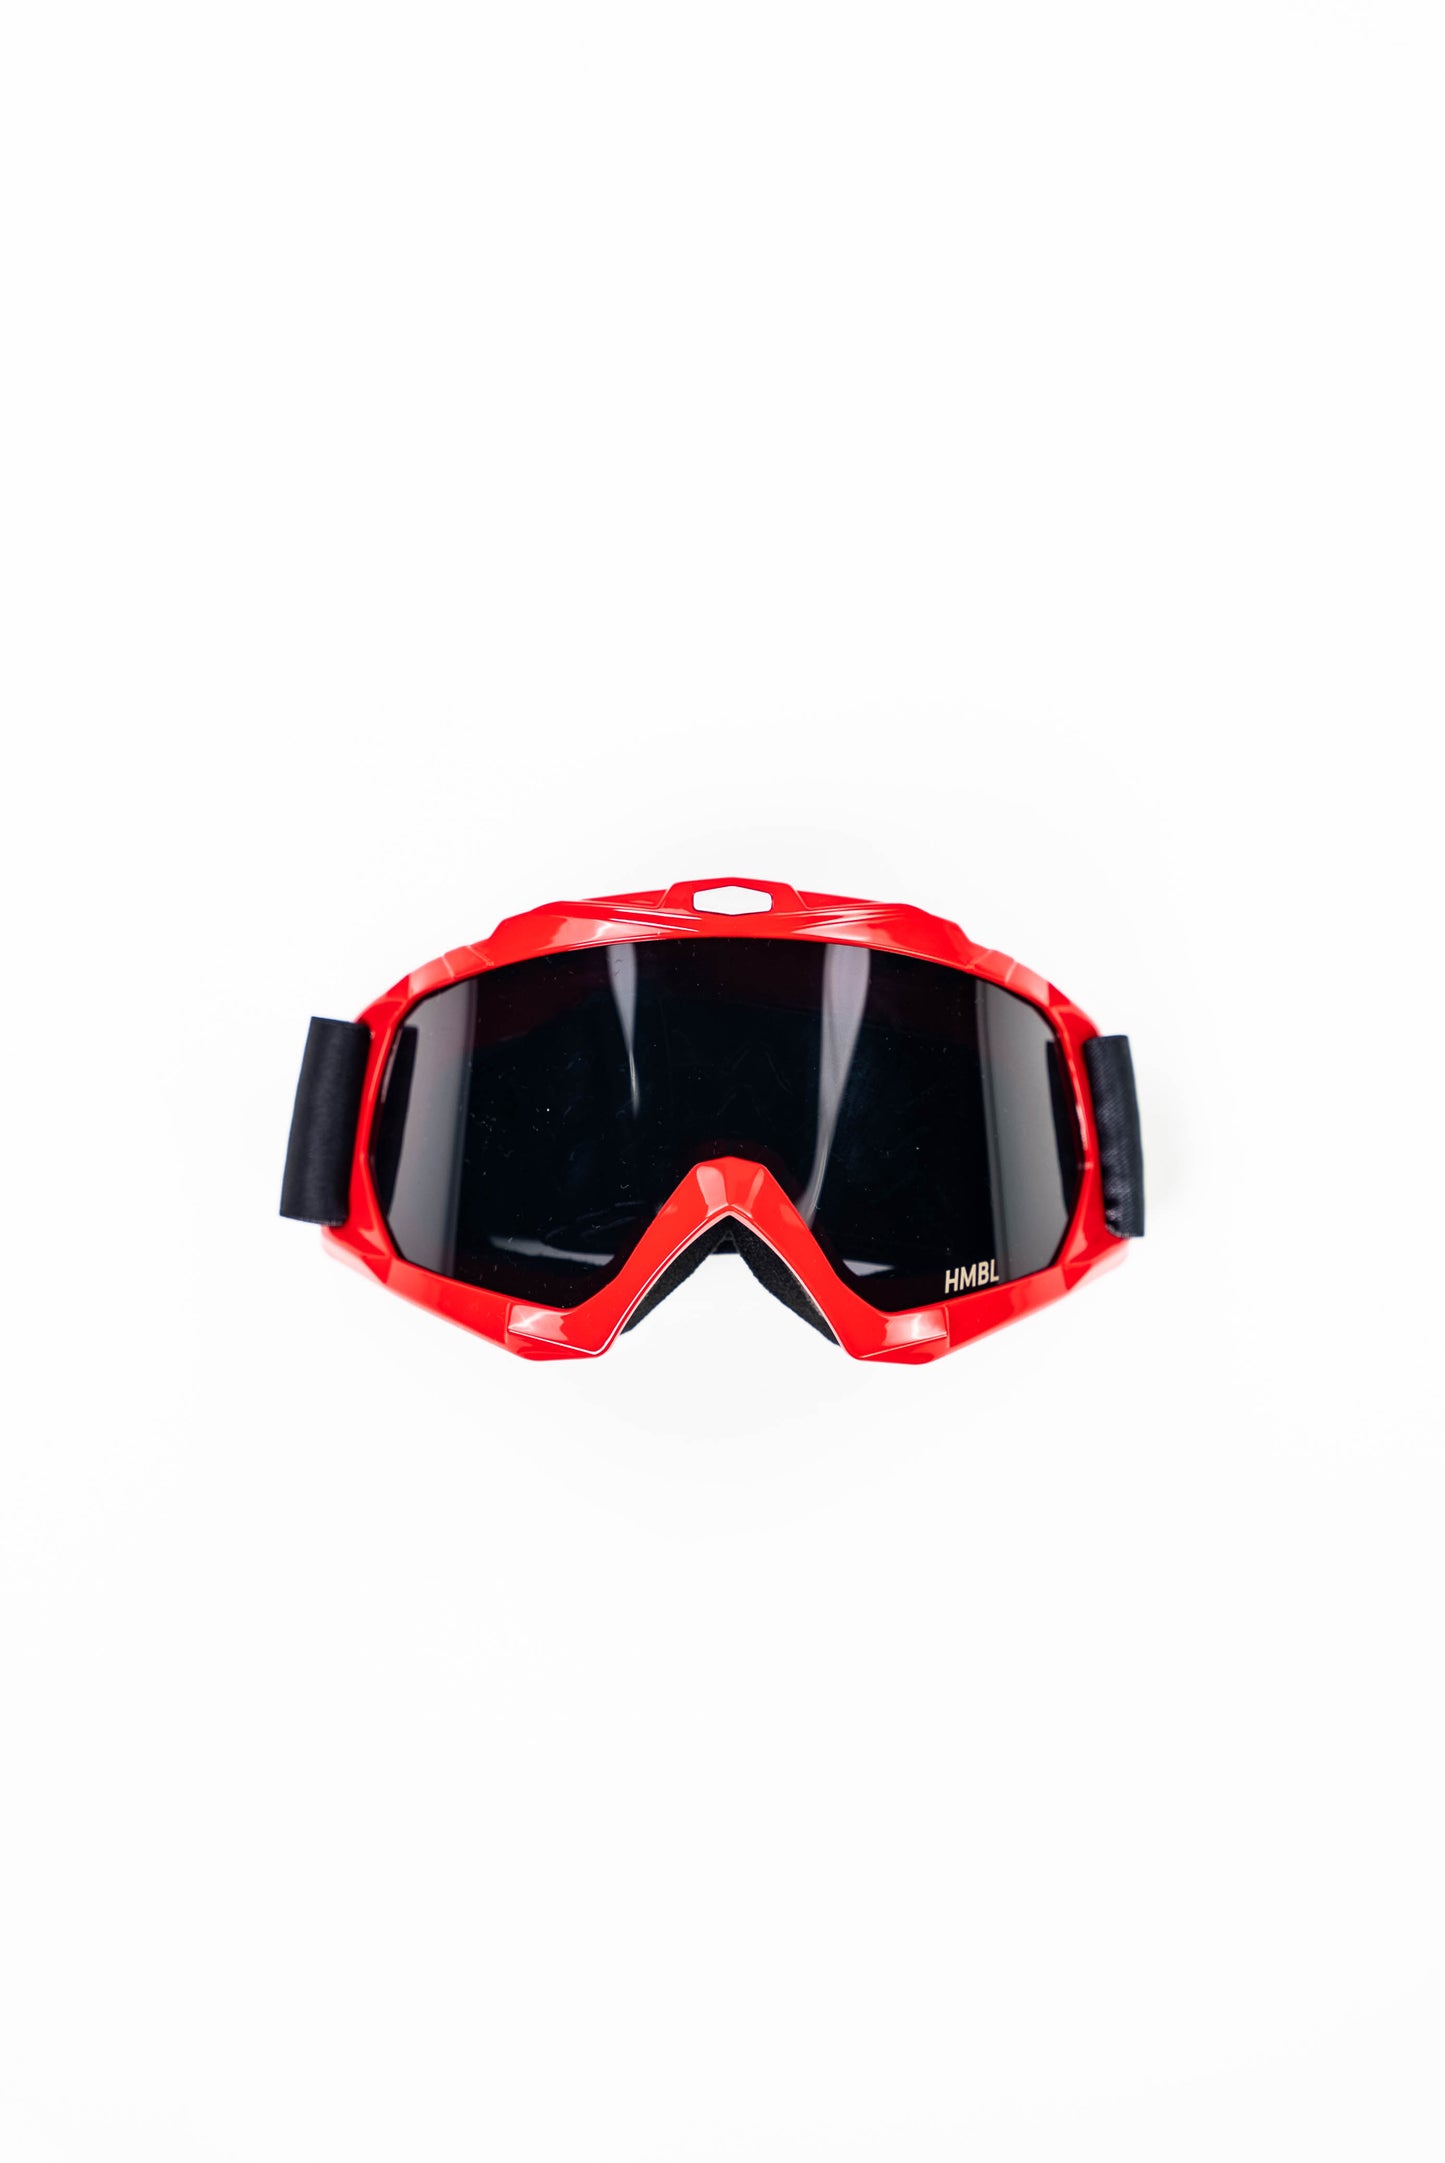 Red ranger HMBL goggles